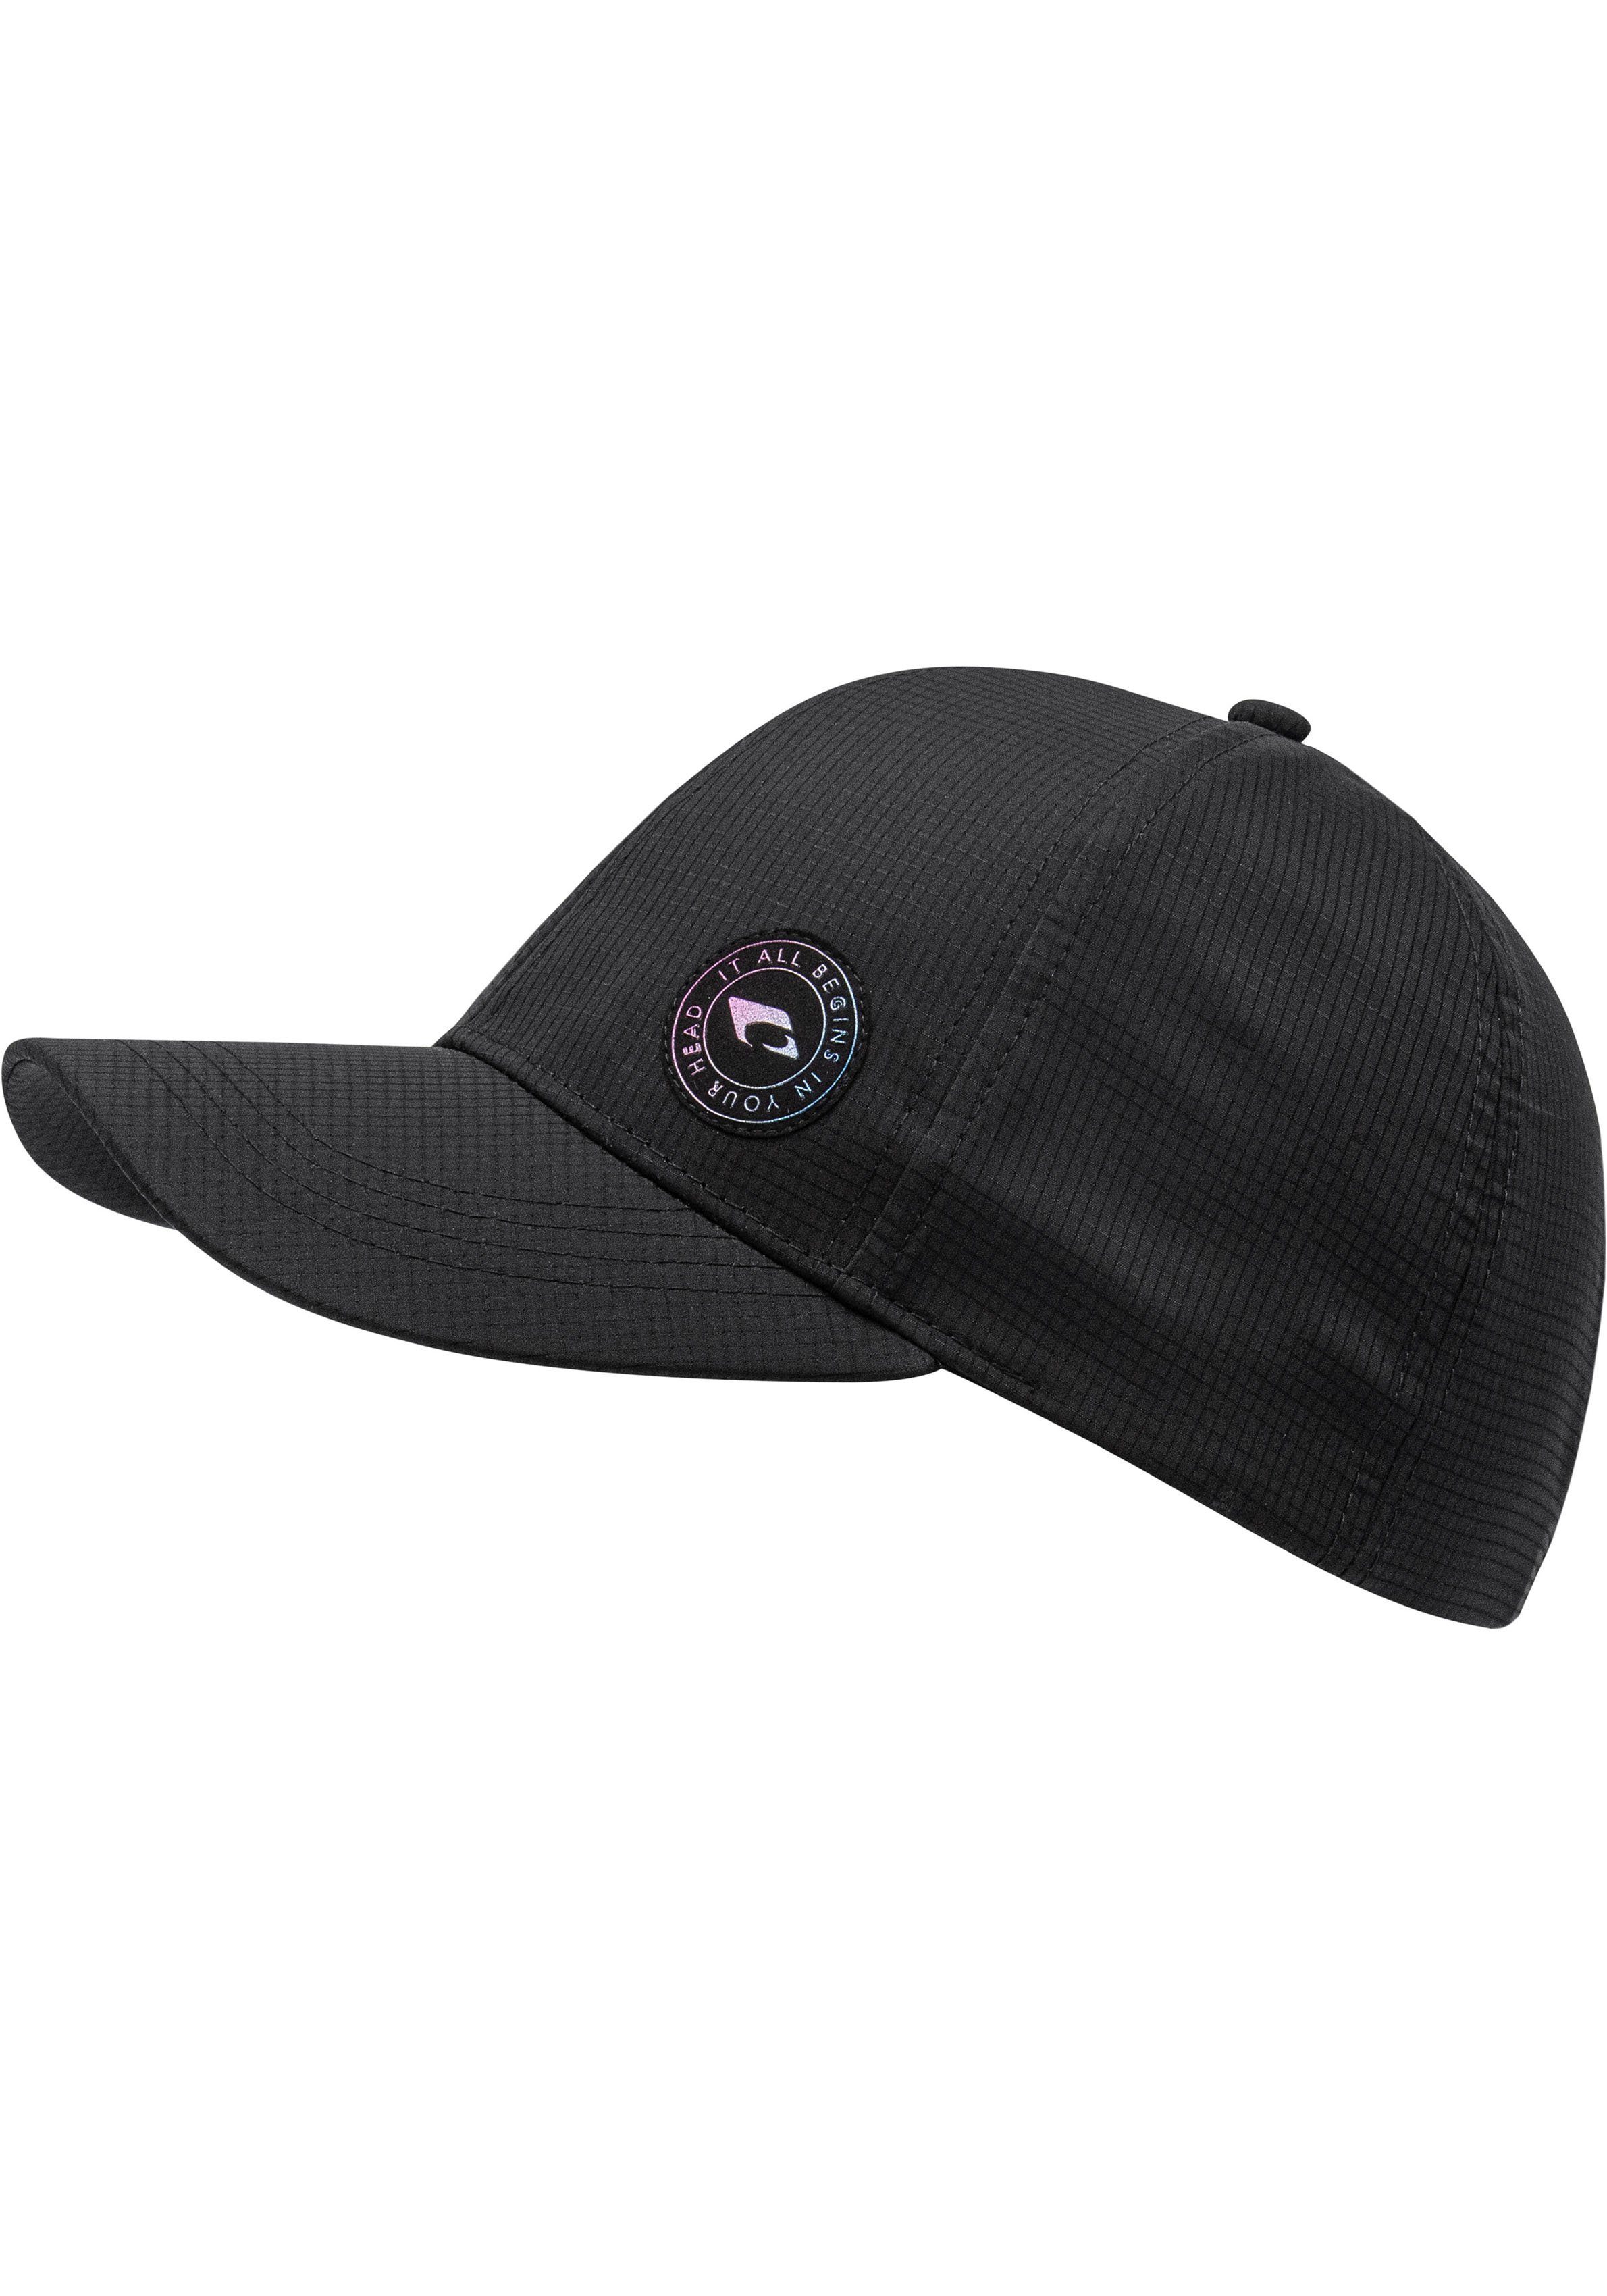 chillouts Baseball Cap Langley Hat schwarz | Baseball Caps